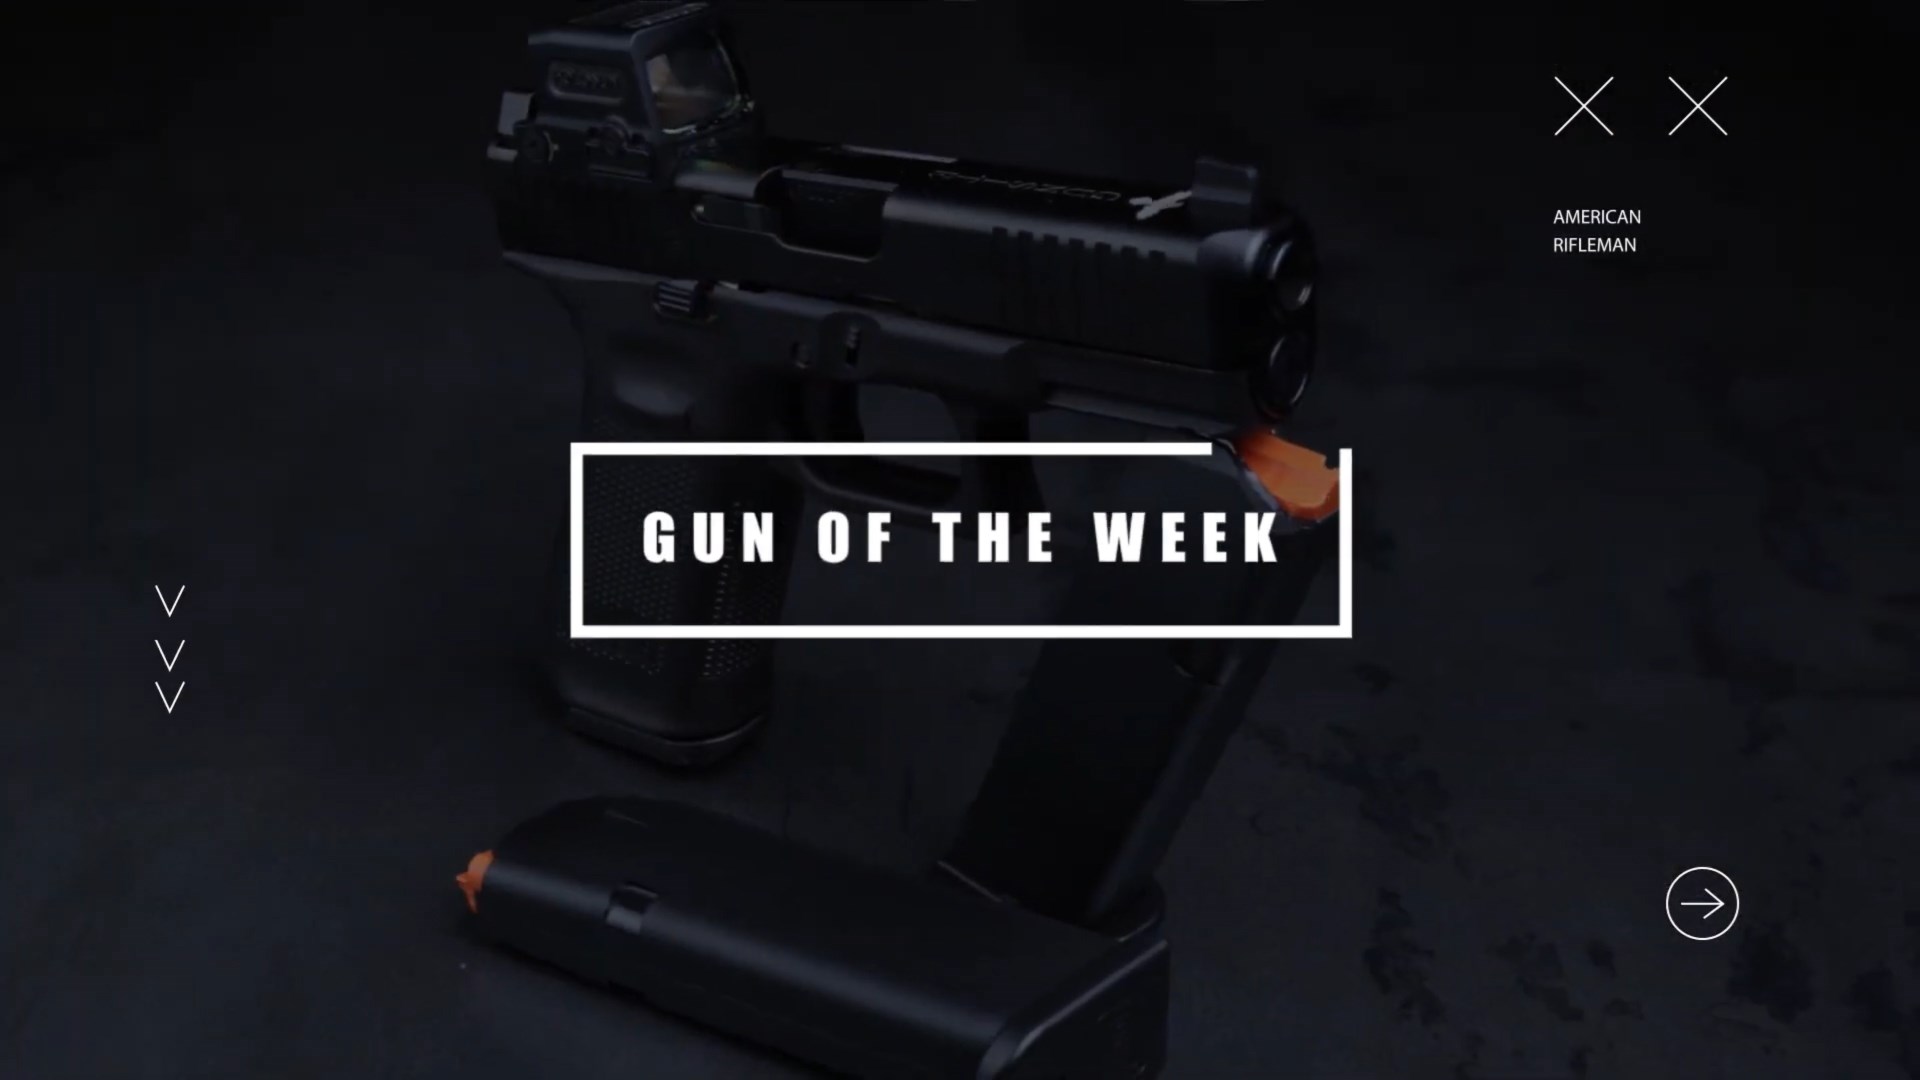 TEXT ON IMAGE "GUN OF THE WEEK AMERICAN RIFLEMAN X" title screen dark background showing gunsite glock g45 davidson's exclusive pistol 9 mm